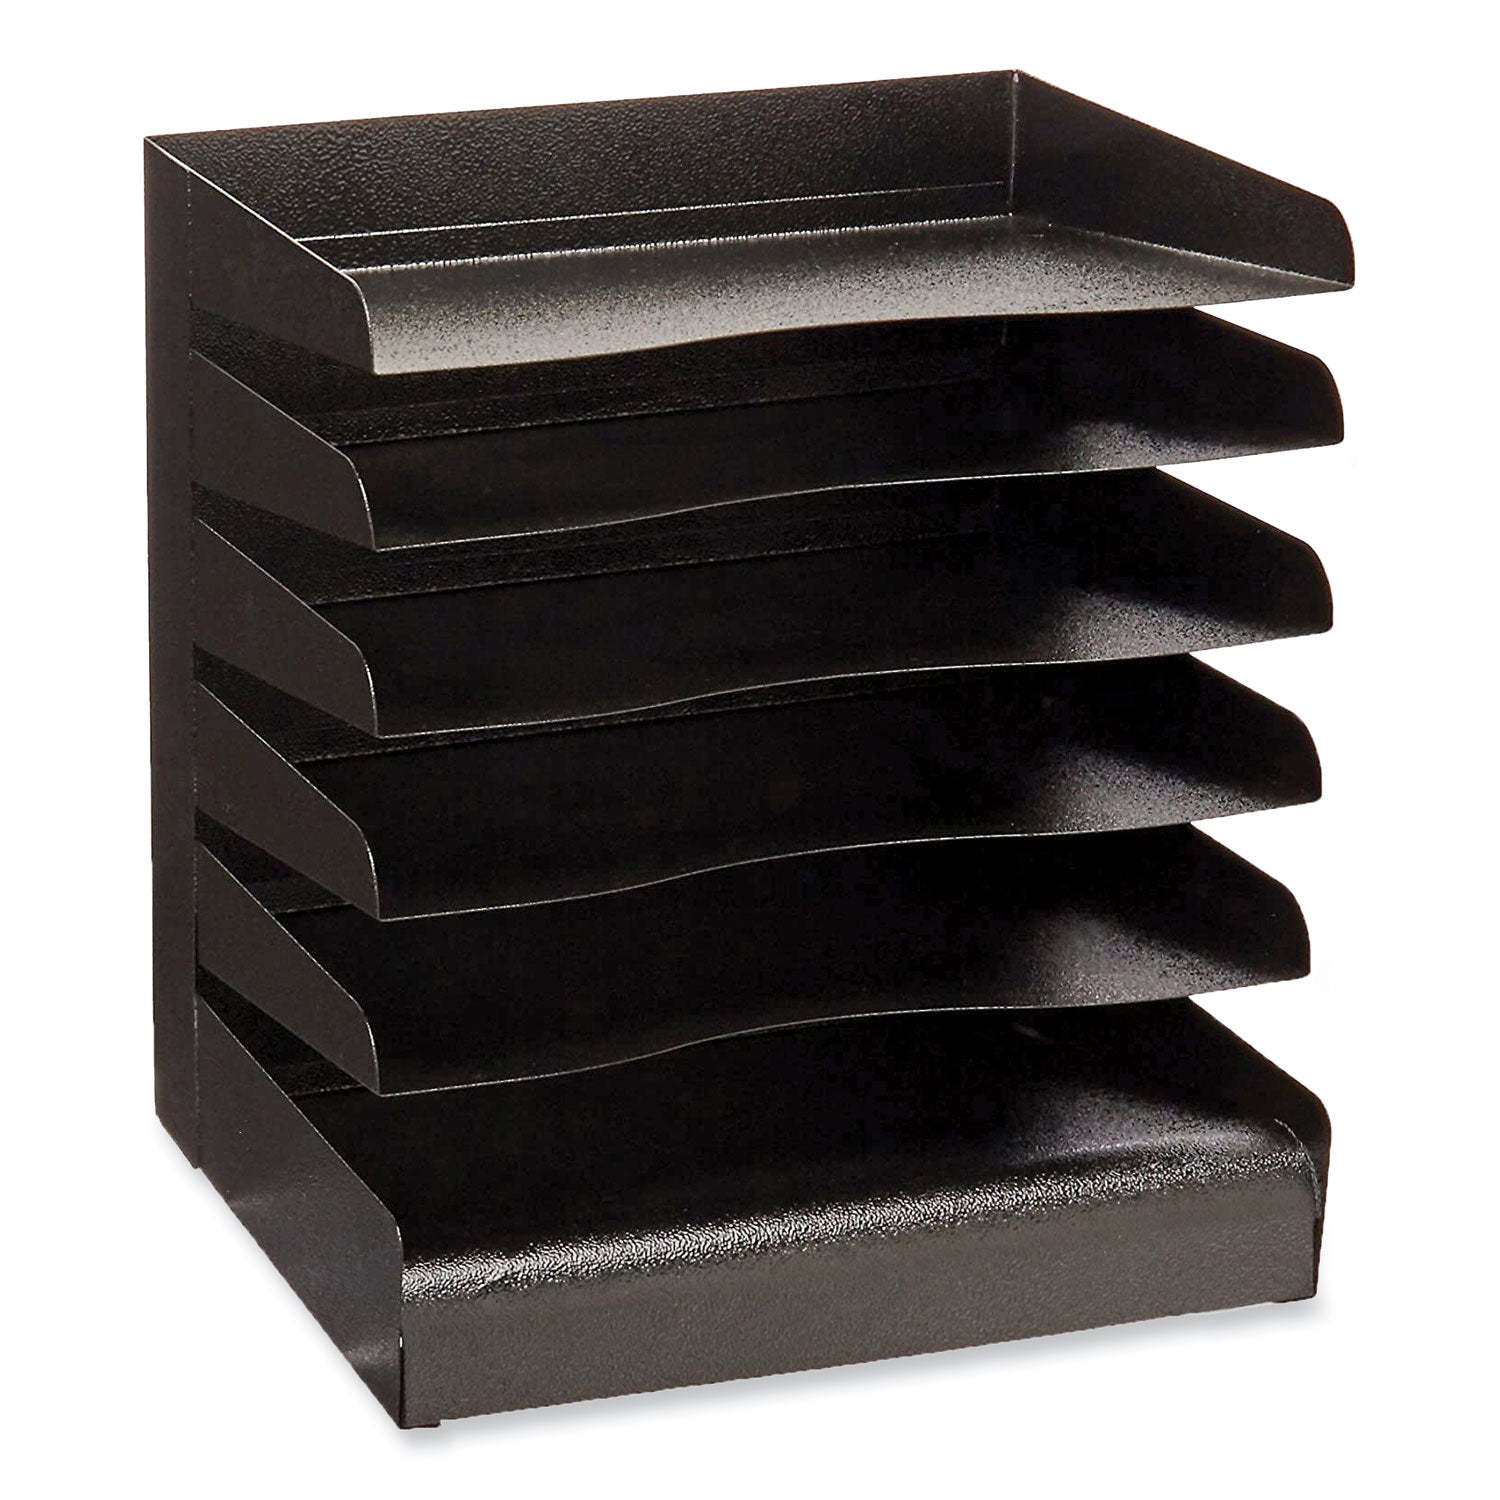 Steel Six-Shelf Desk Tray Sorter, 6 Sections, Letter Size Files, 12 x 9.5 x 13.5, Black, Ships in 1-3 Business Days - 